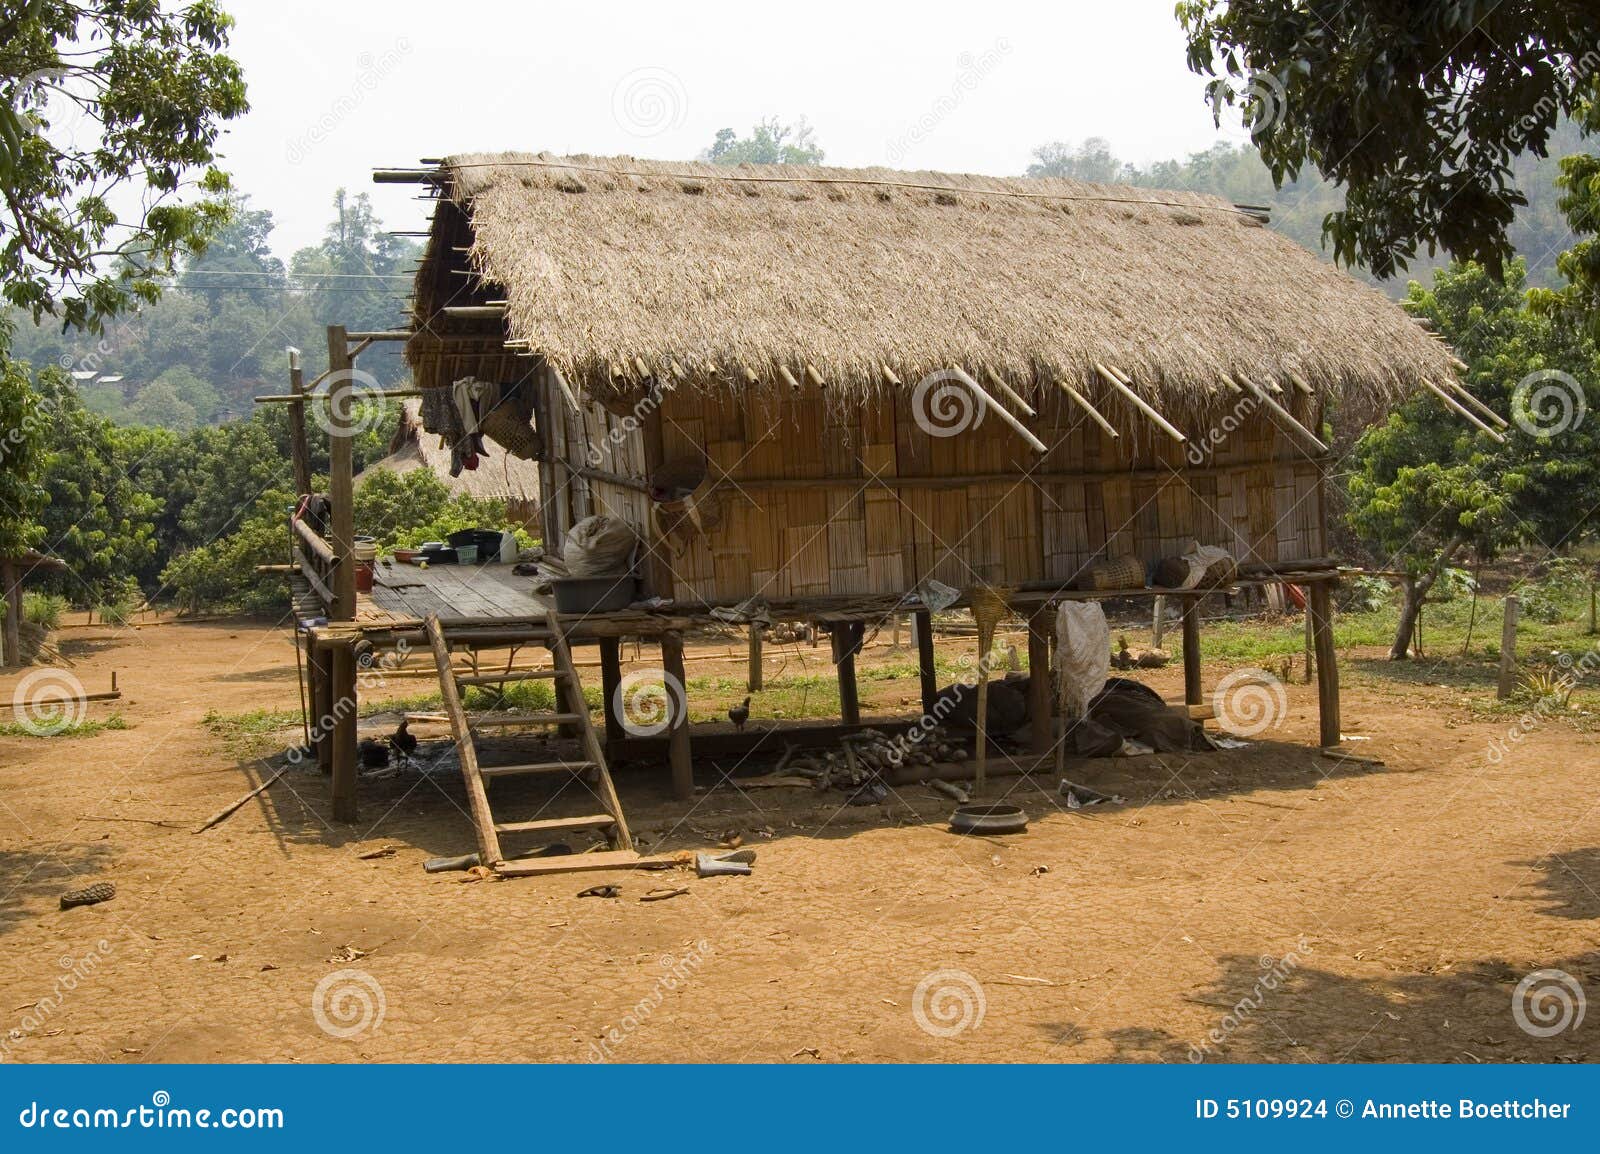  Hutte en bambou  tribale photo stock Image du maison tha  